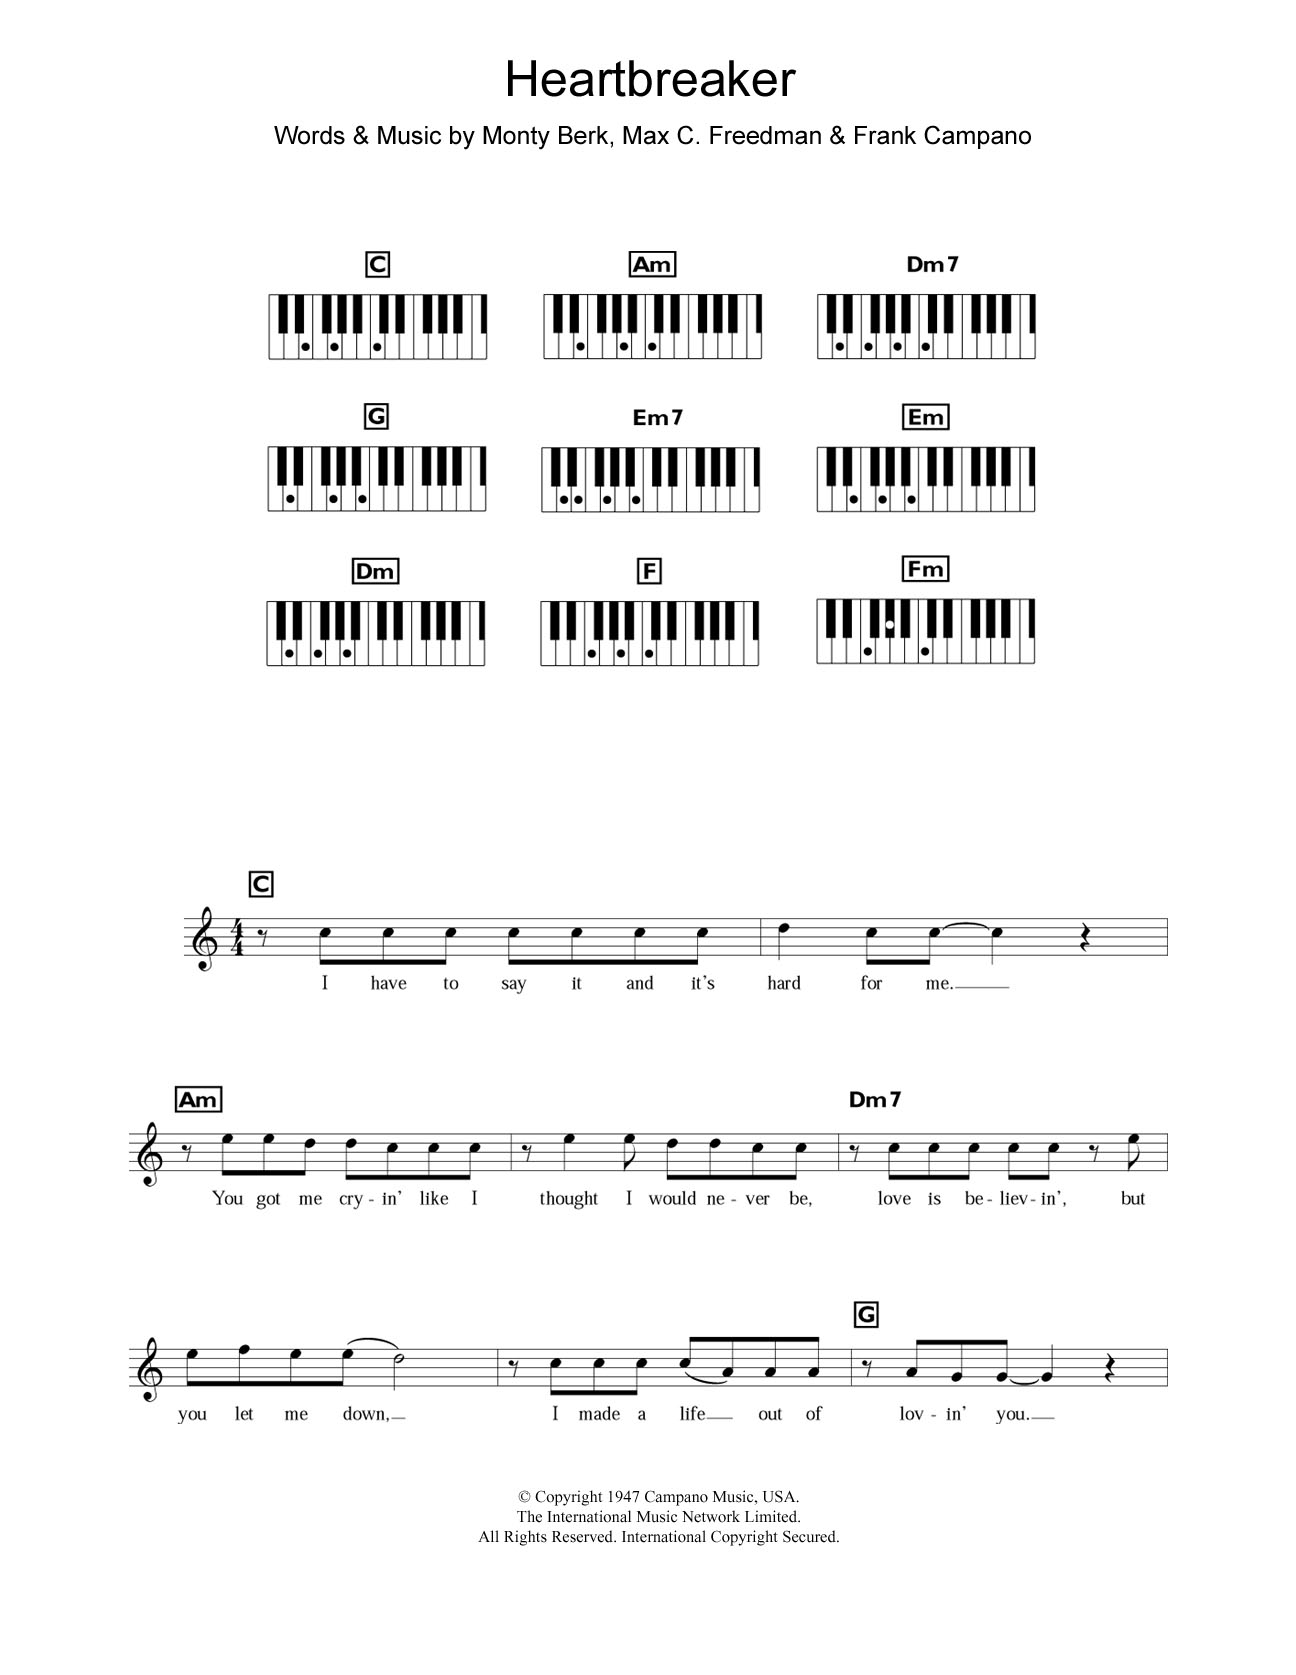 Dionne Warwick Heartbreaker Sheet Music Notes & Chords for Keyboard - Download or Print PDF